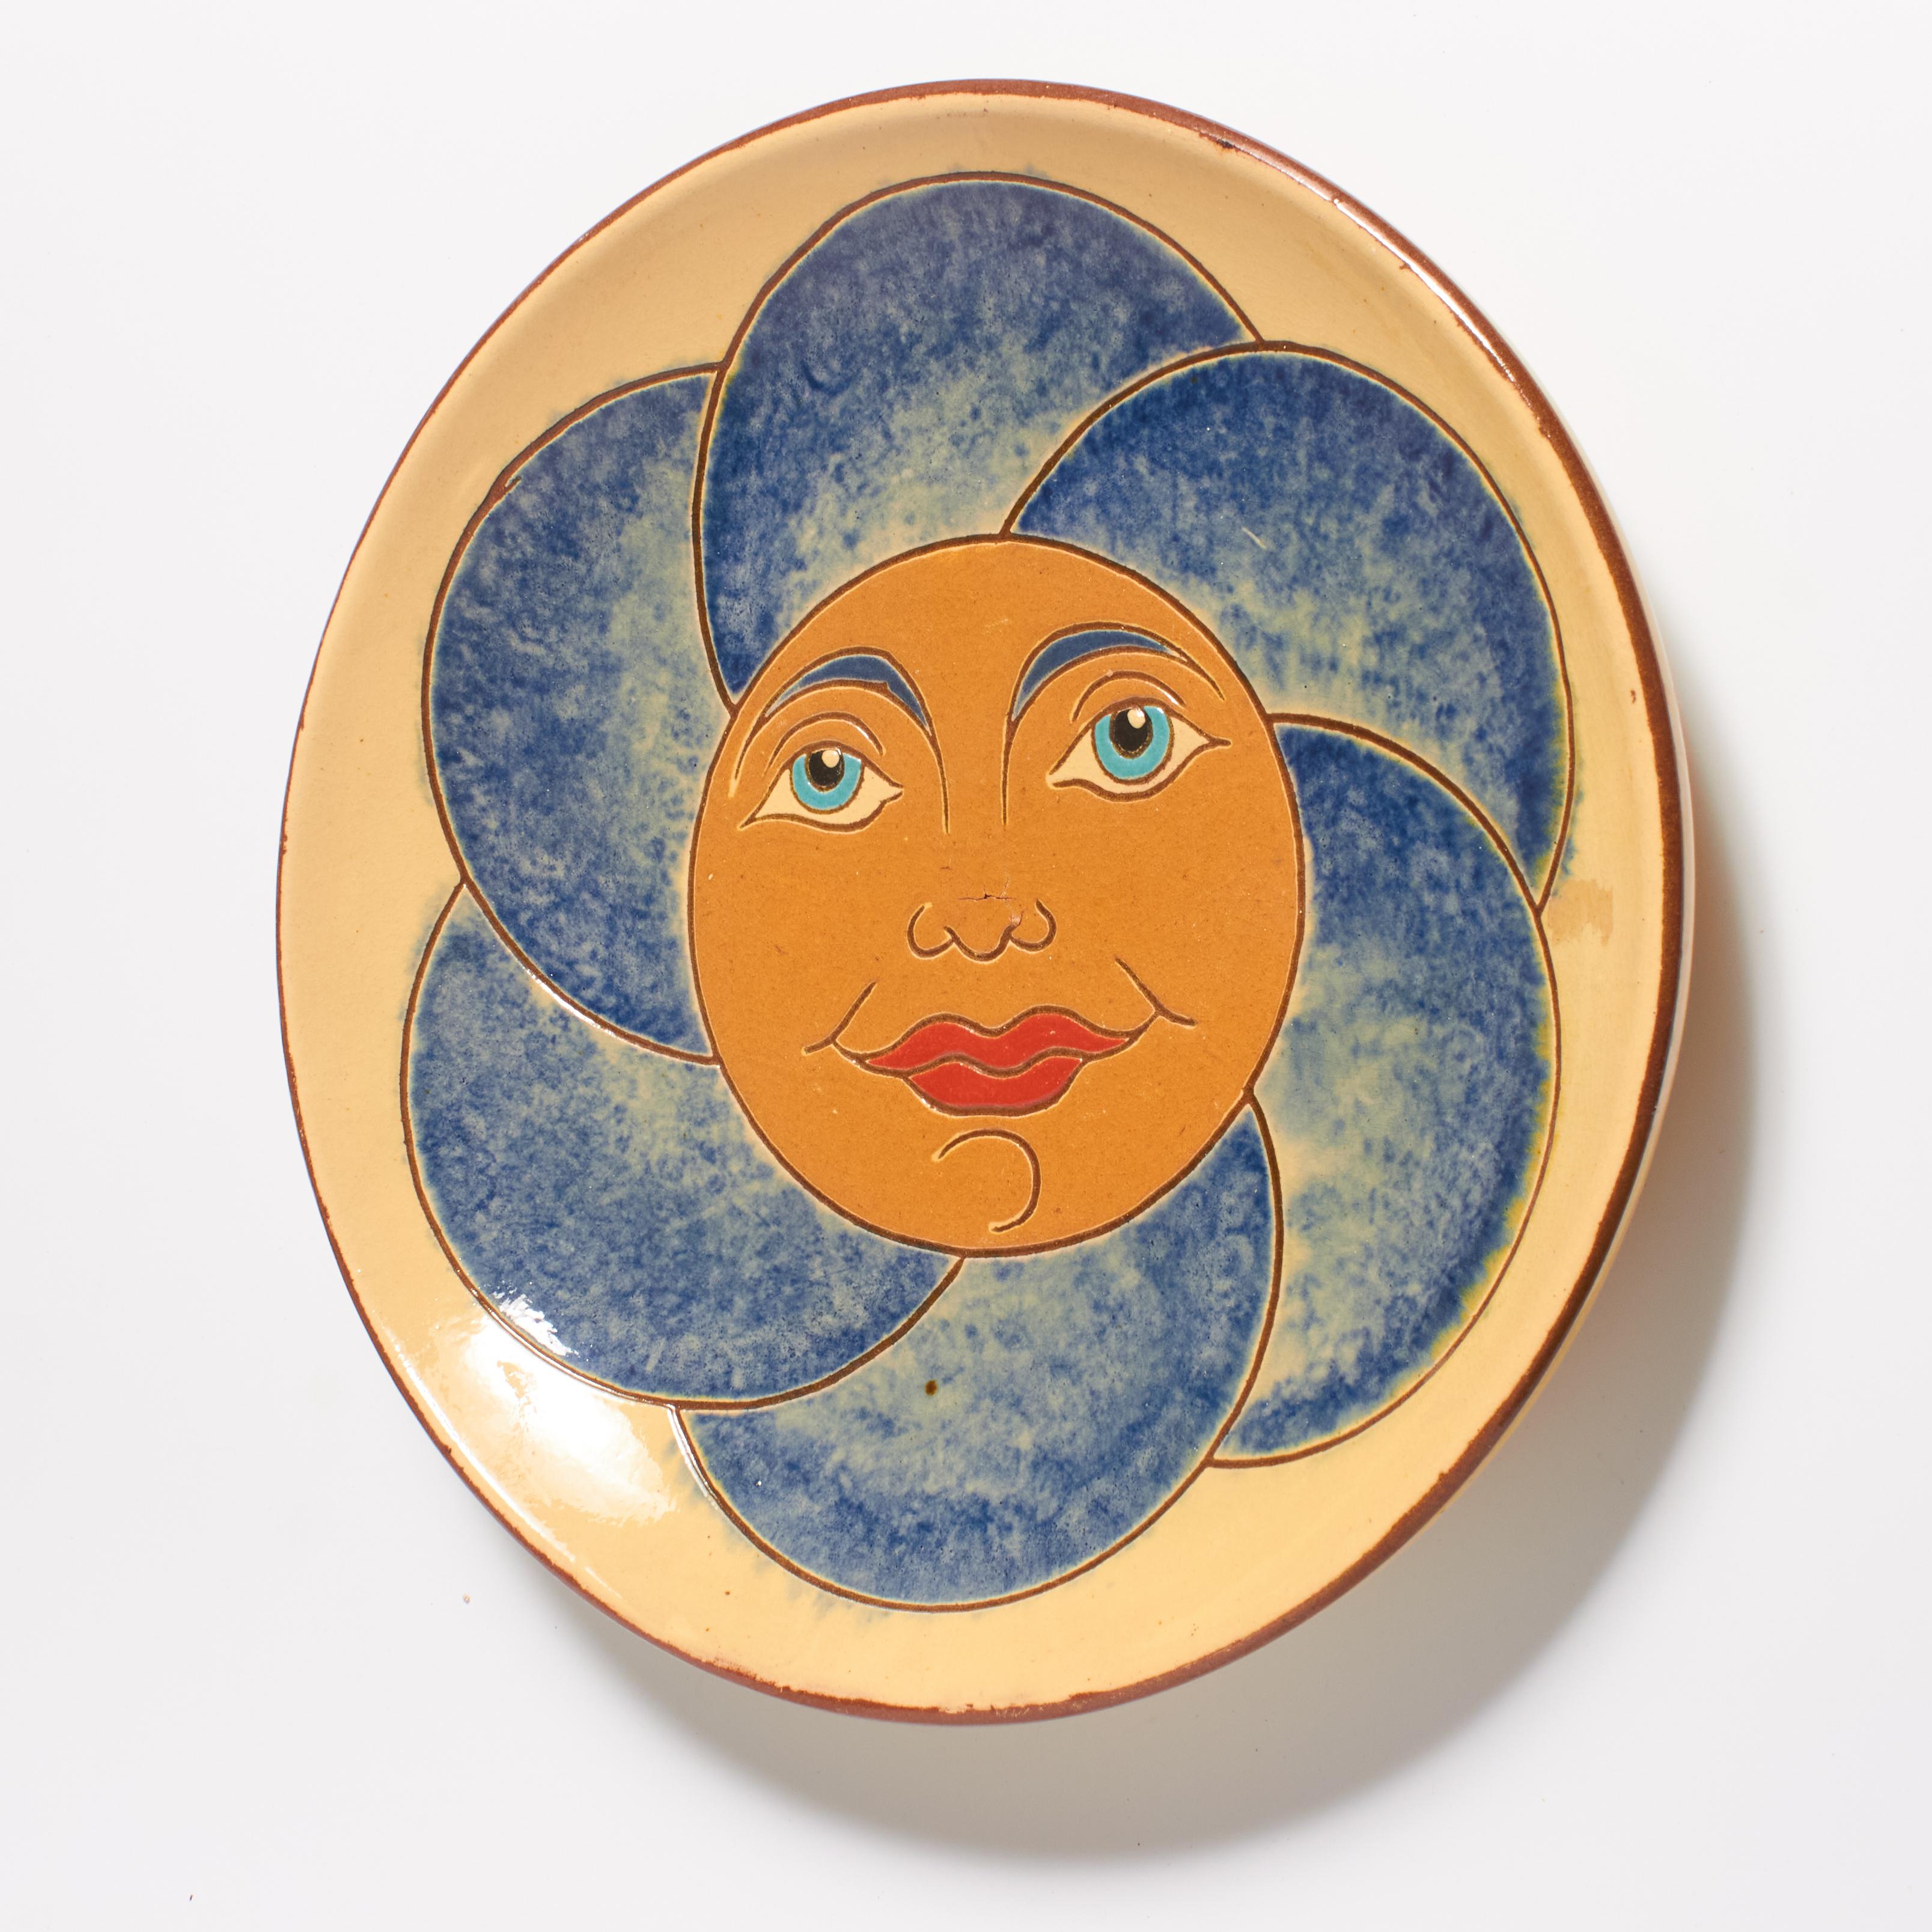 Spanish Vintage 1960 Hand-Painted Blue, Orange Ceramic Plate by Artist Diaz Costa For Sale